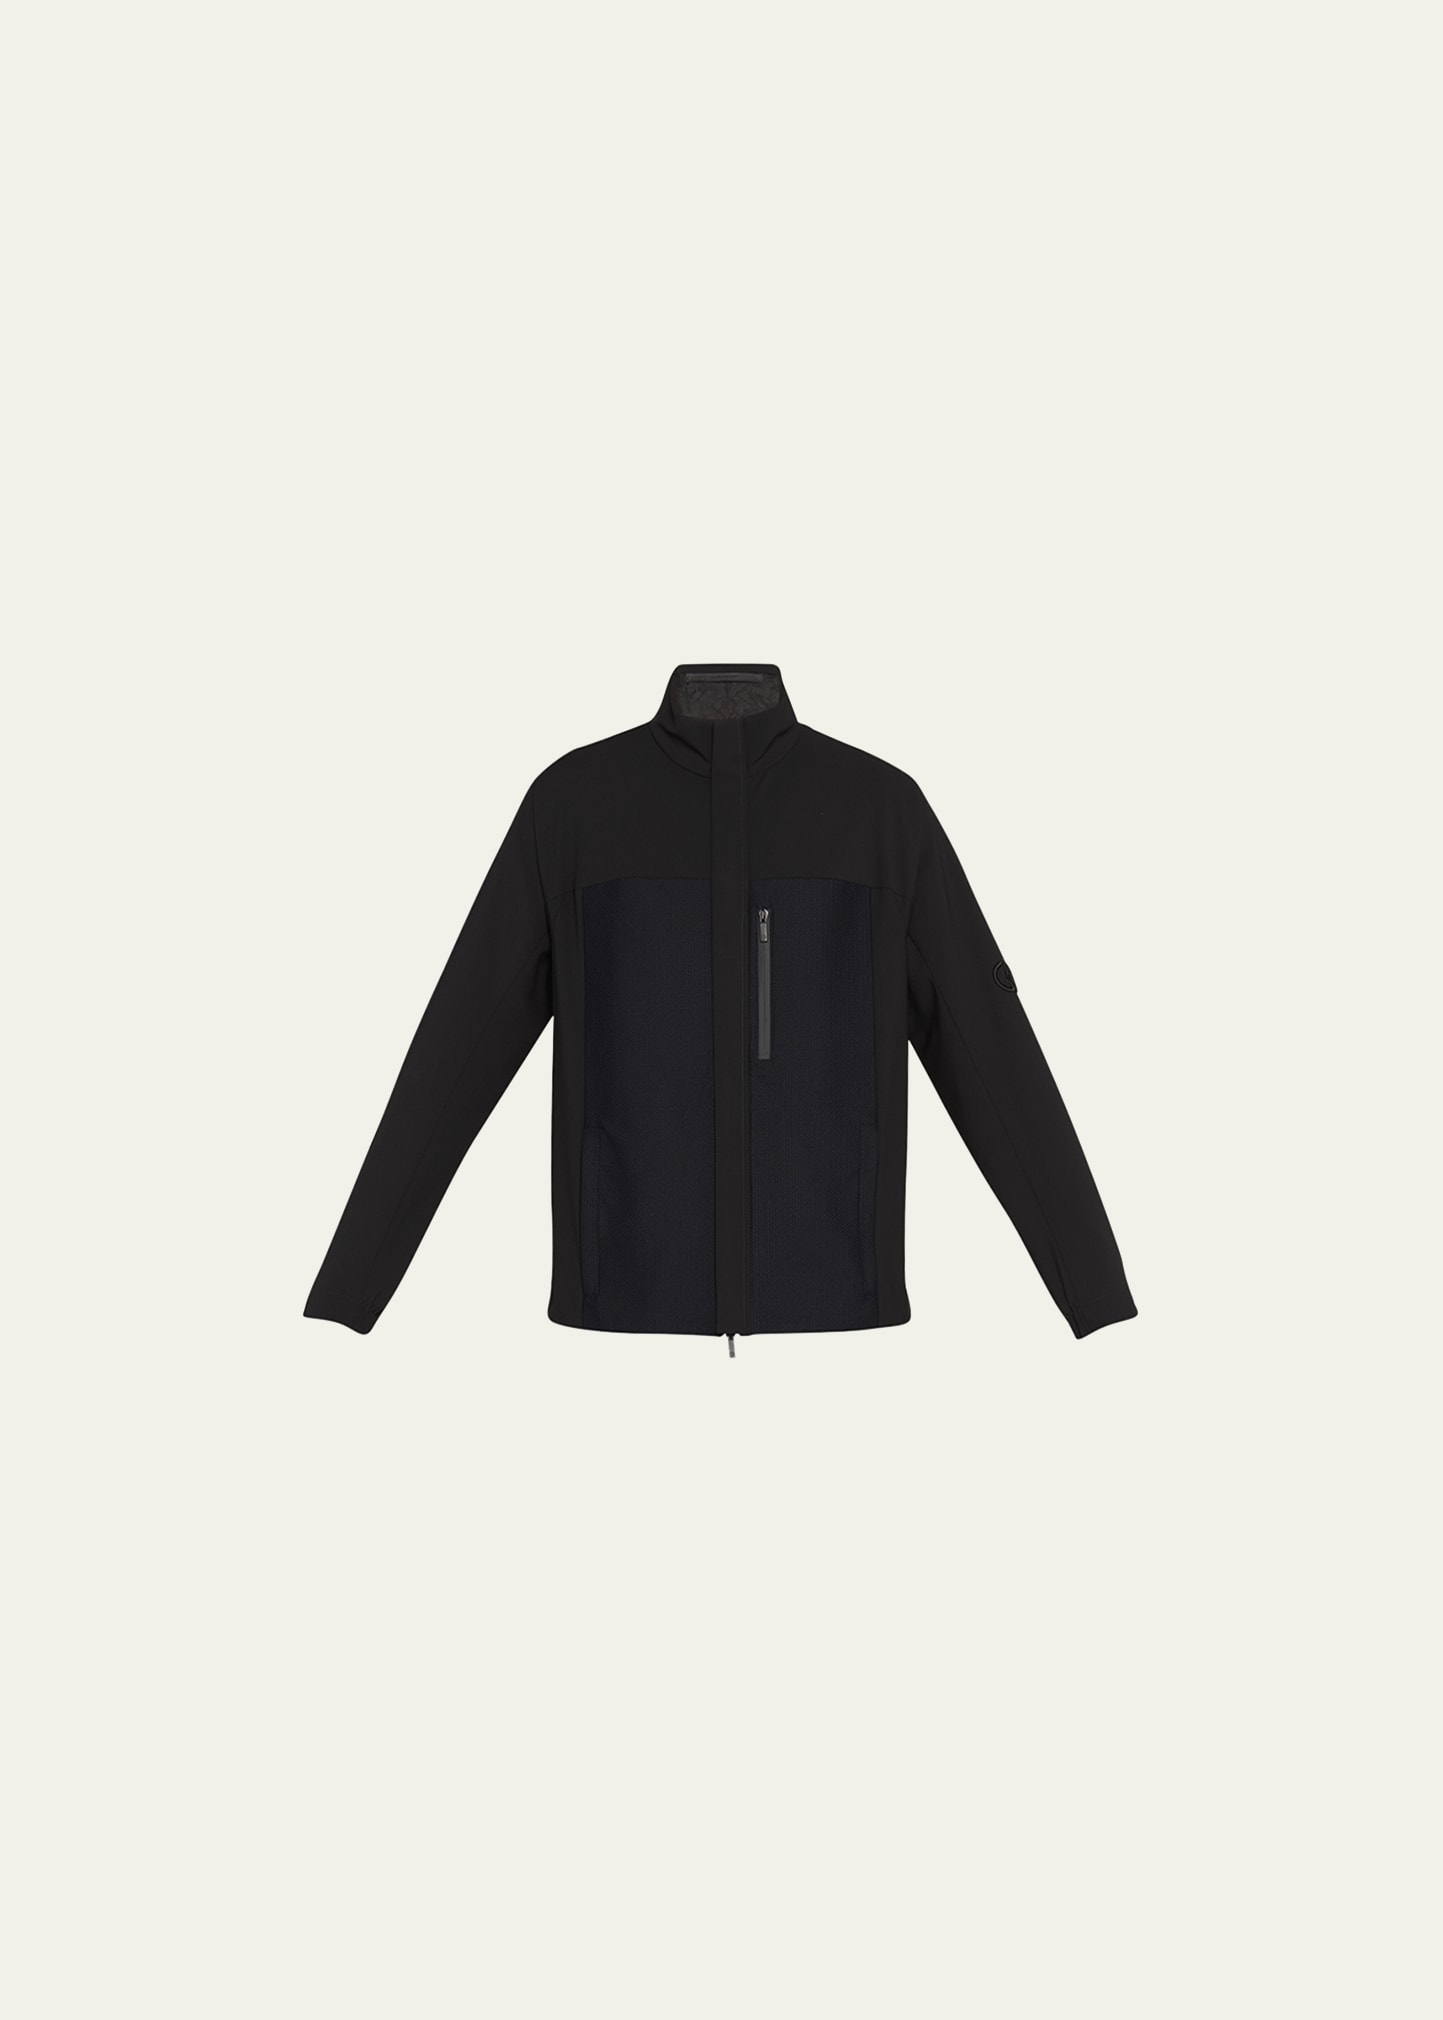 Giorgio Armani Men's Mixed Media Jacket In Solid Black